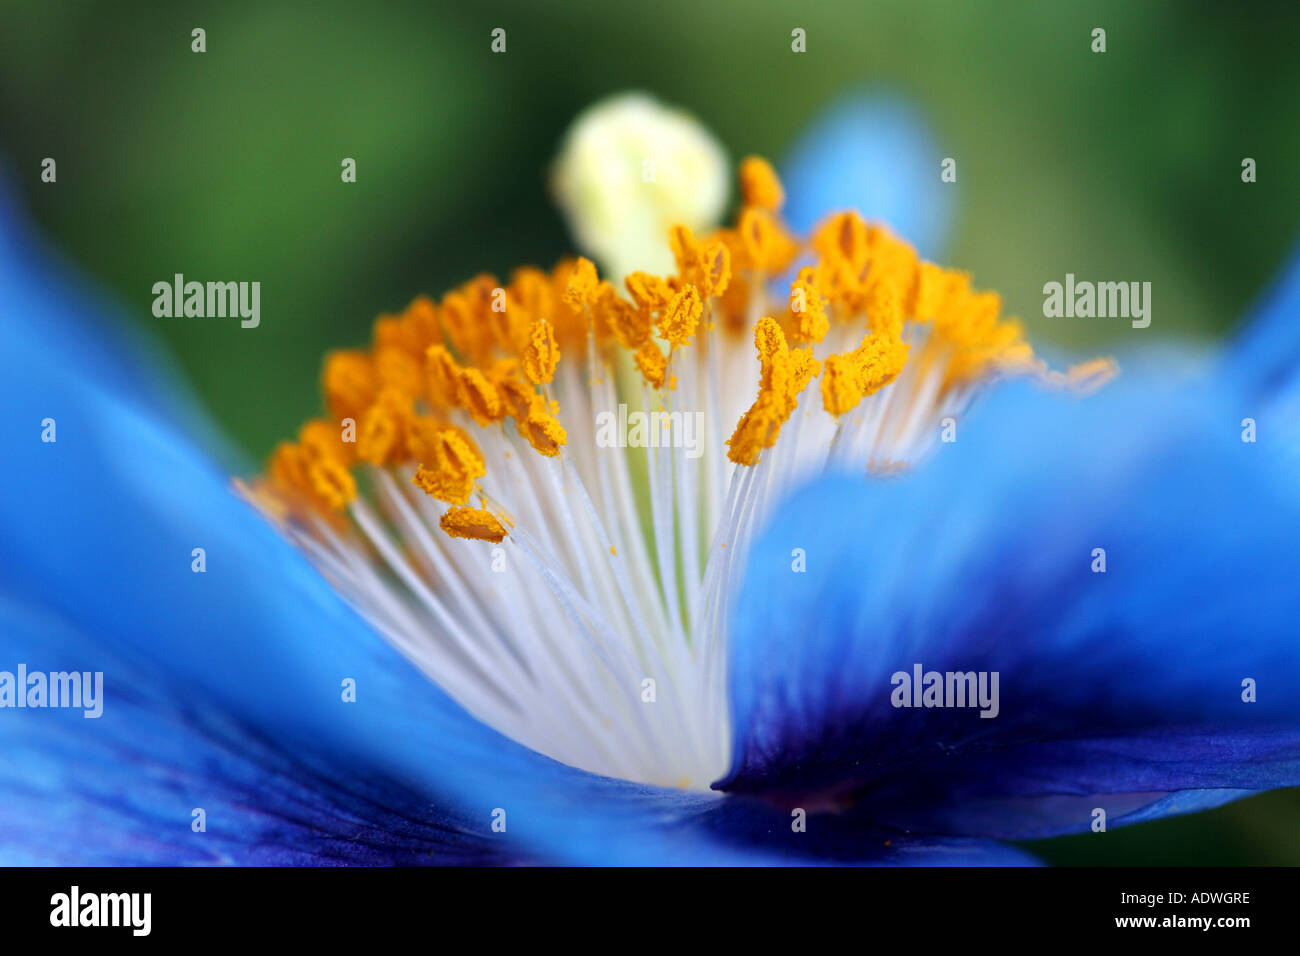 Meconopsis x sheldonii Lingholm. Blue Himalayan Poppy stamen detail Stock Photo